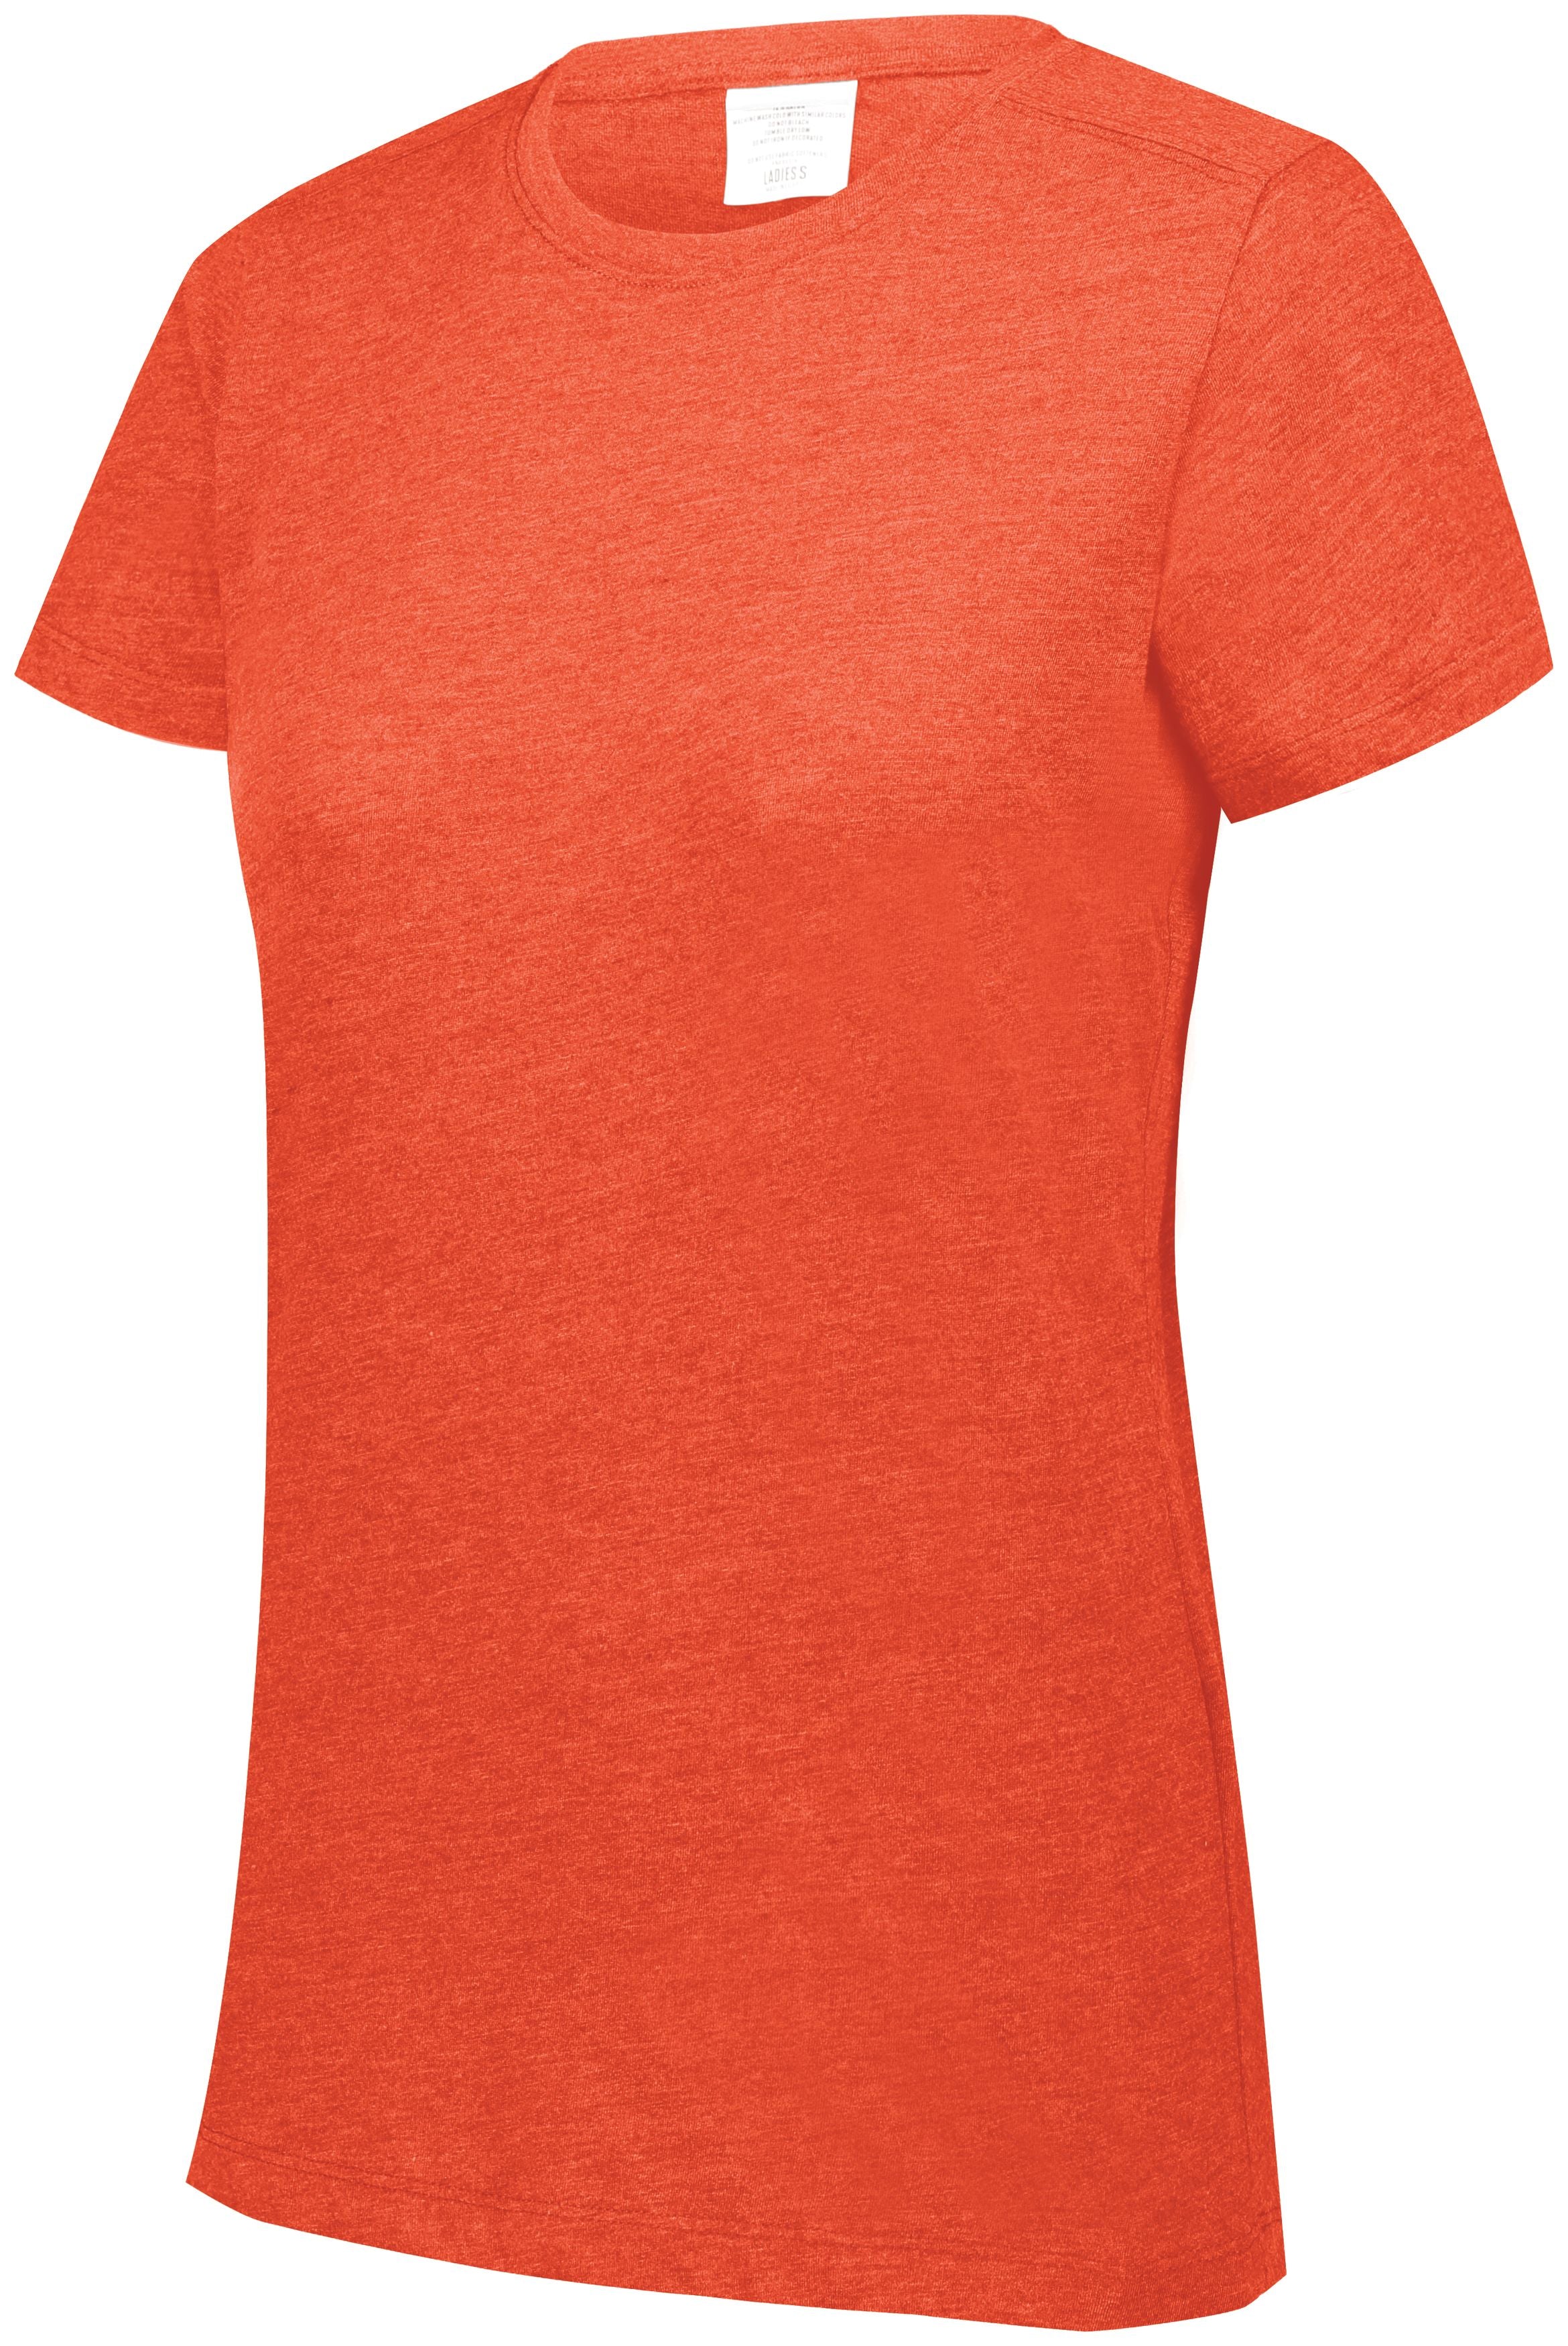 Augusta Sportswear Ladies Tri-Blend T-Shirt in Orange Heather  -Part of the Ladies, Ladies-Tee-Shirt, T-Shirts, Augusta-Products, Shirts product lines at KanaleyCreations.com